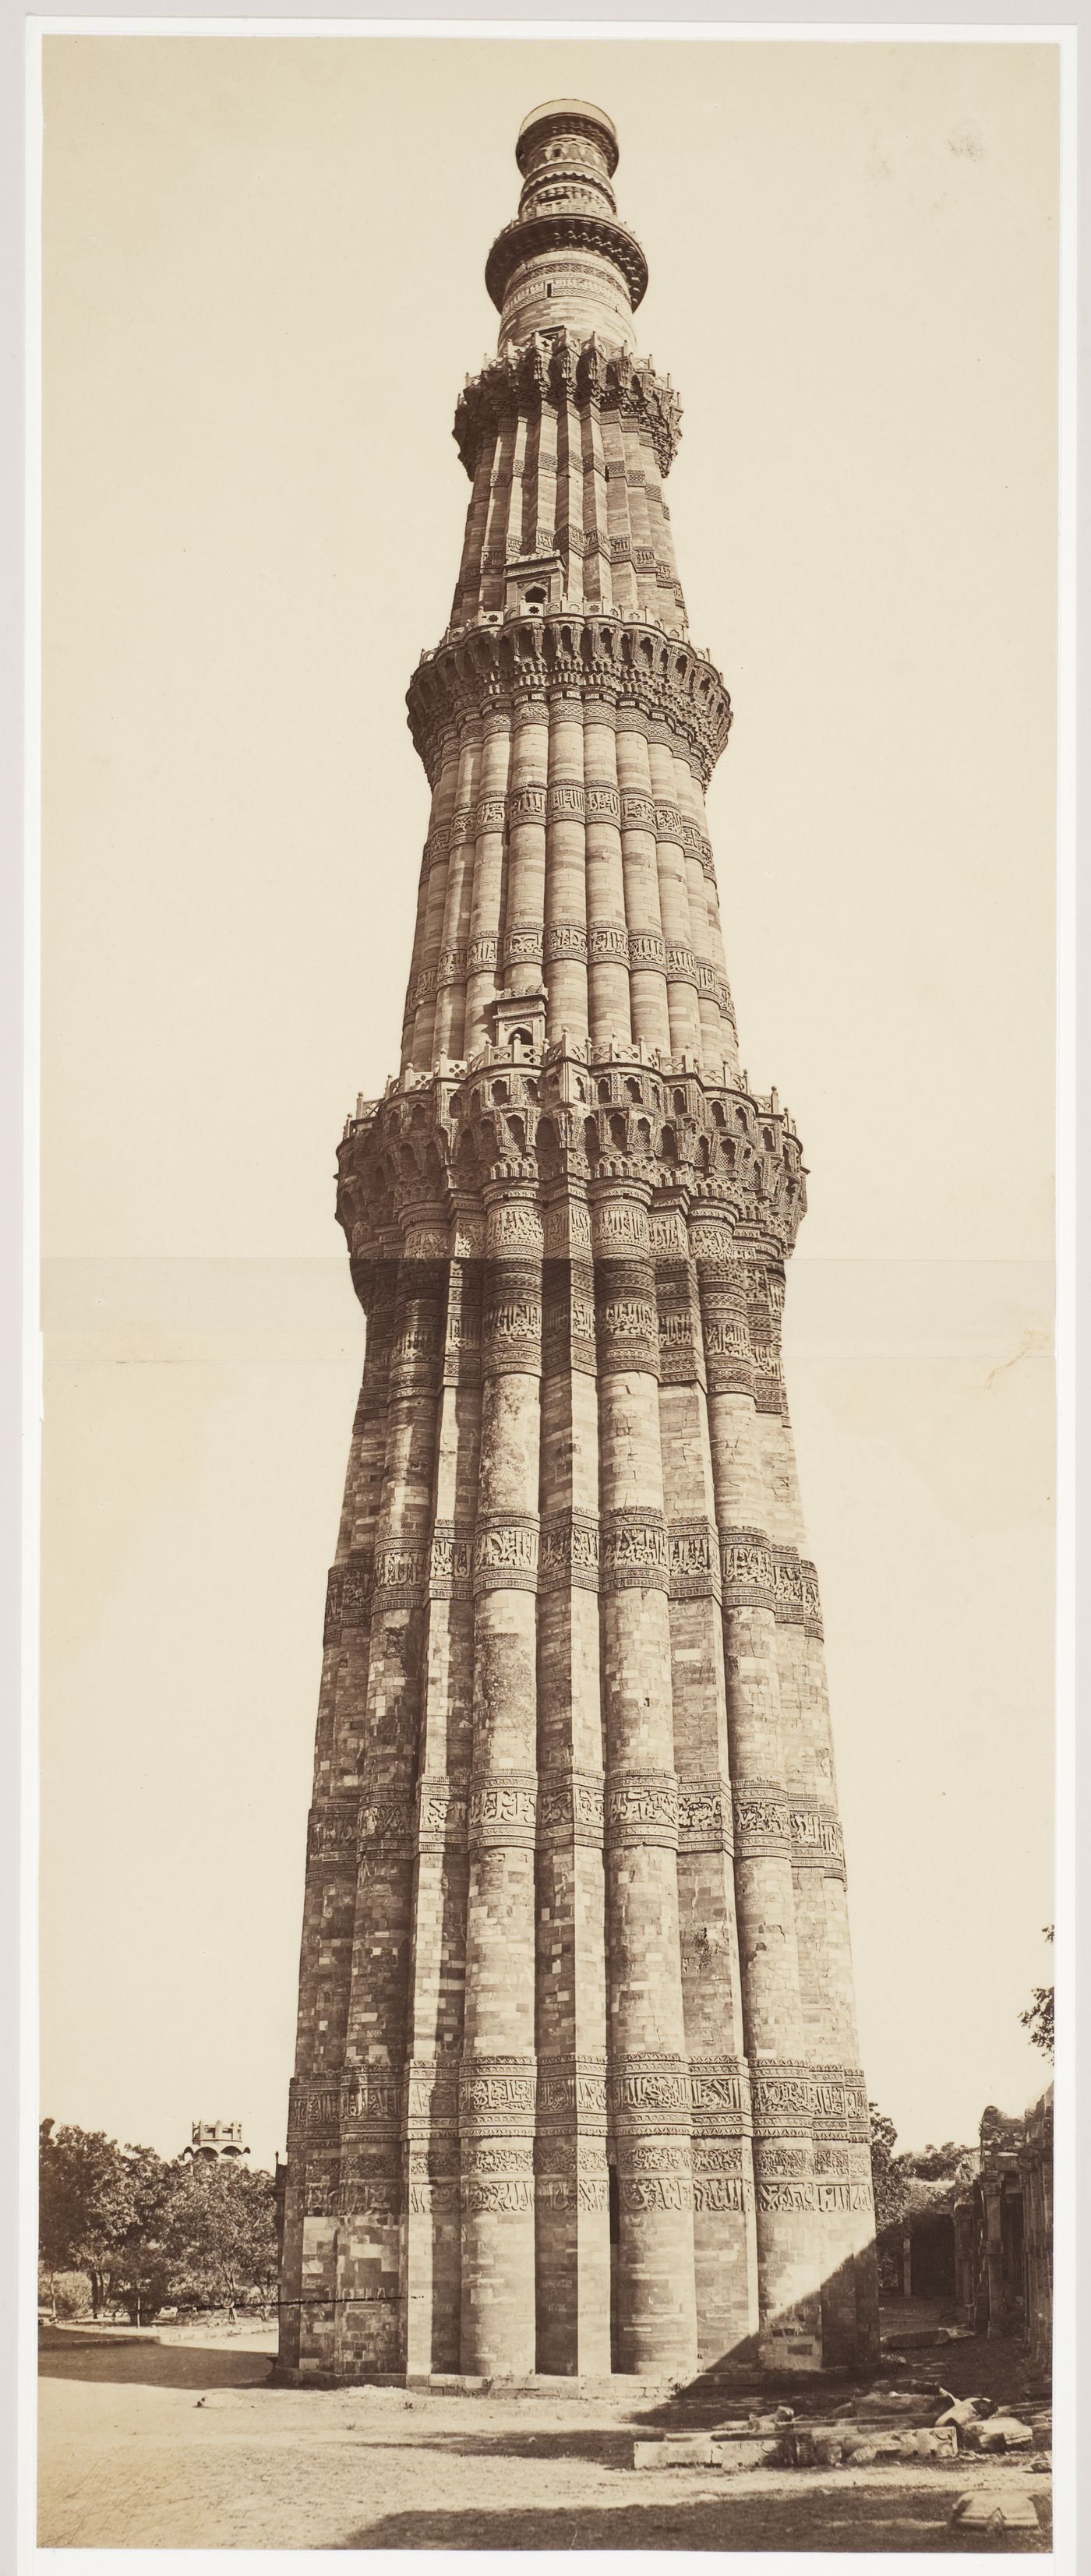 Panorama of the Qutb Minar, Quwwat al-Islam [Might of Islam] Mosque Complex, Delhi, India